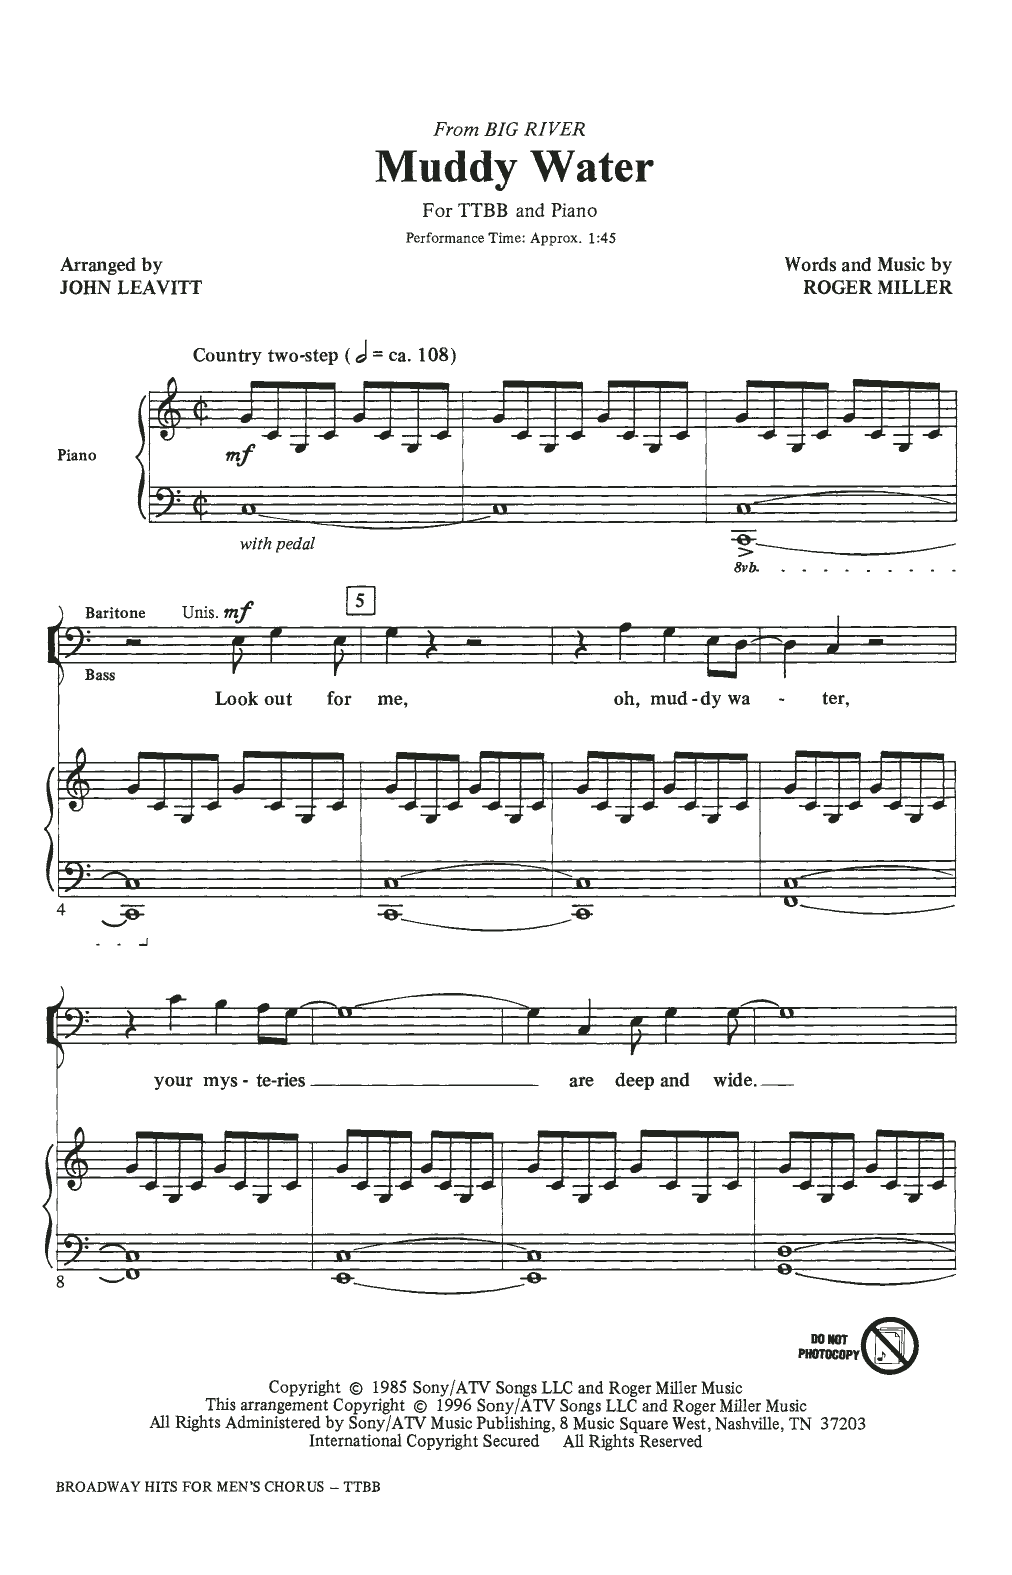 Download John Leavitt Broadway Hits For Men's Chorus Sheet Music and learn how to play TTBB Choir PDF digital score in minutes